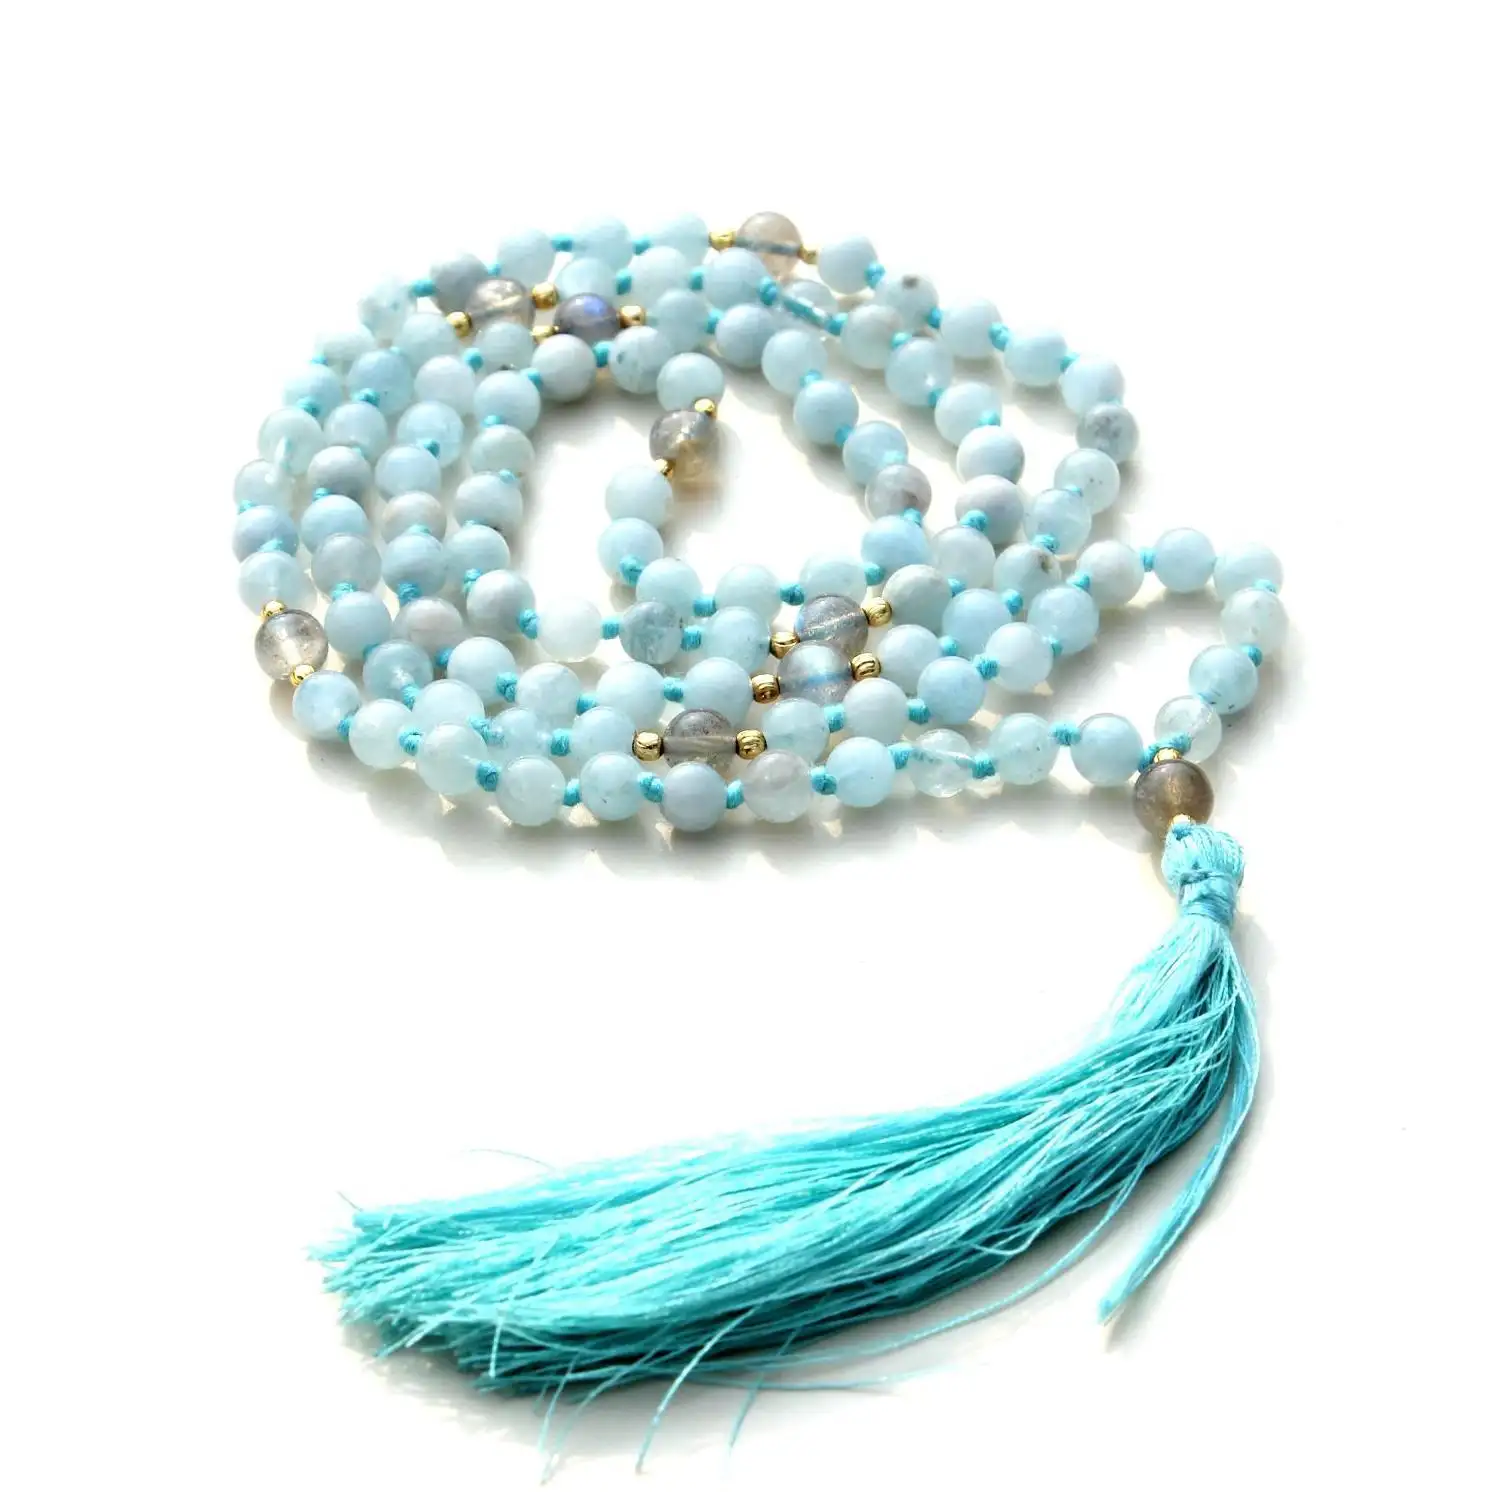 Buy Yoga Jewelry Hindu Spiritual 108 Beads Aquamarine Long Mala Necklace Piedras Naturales Healing Crystal Stone